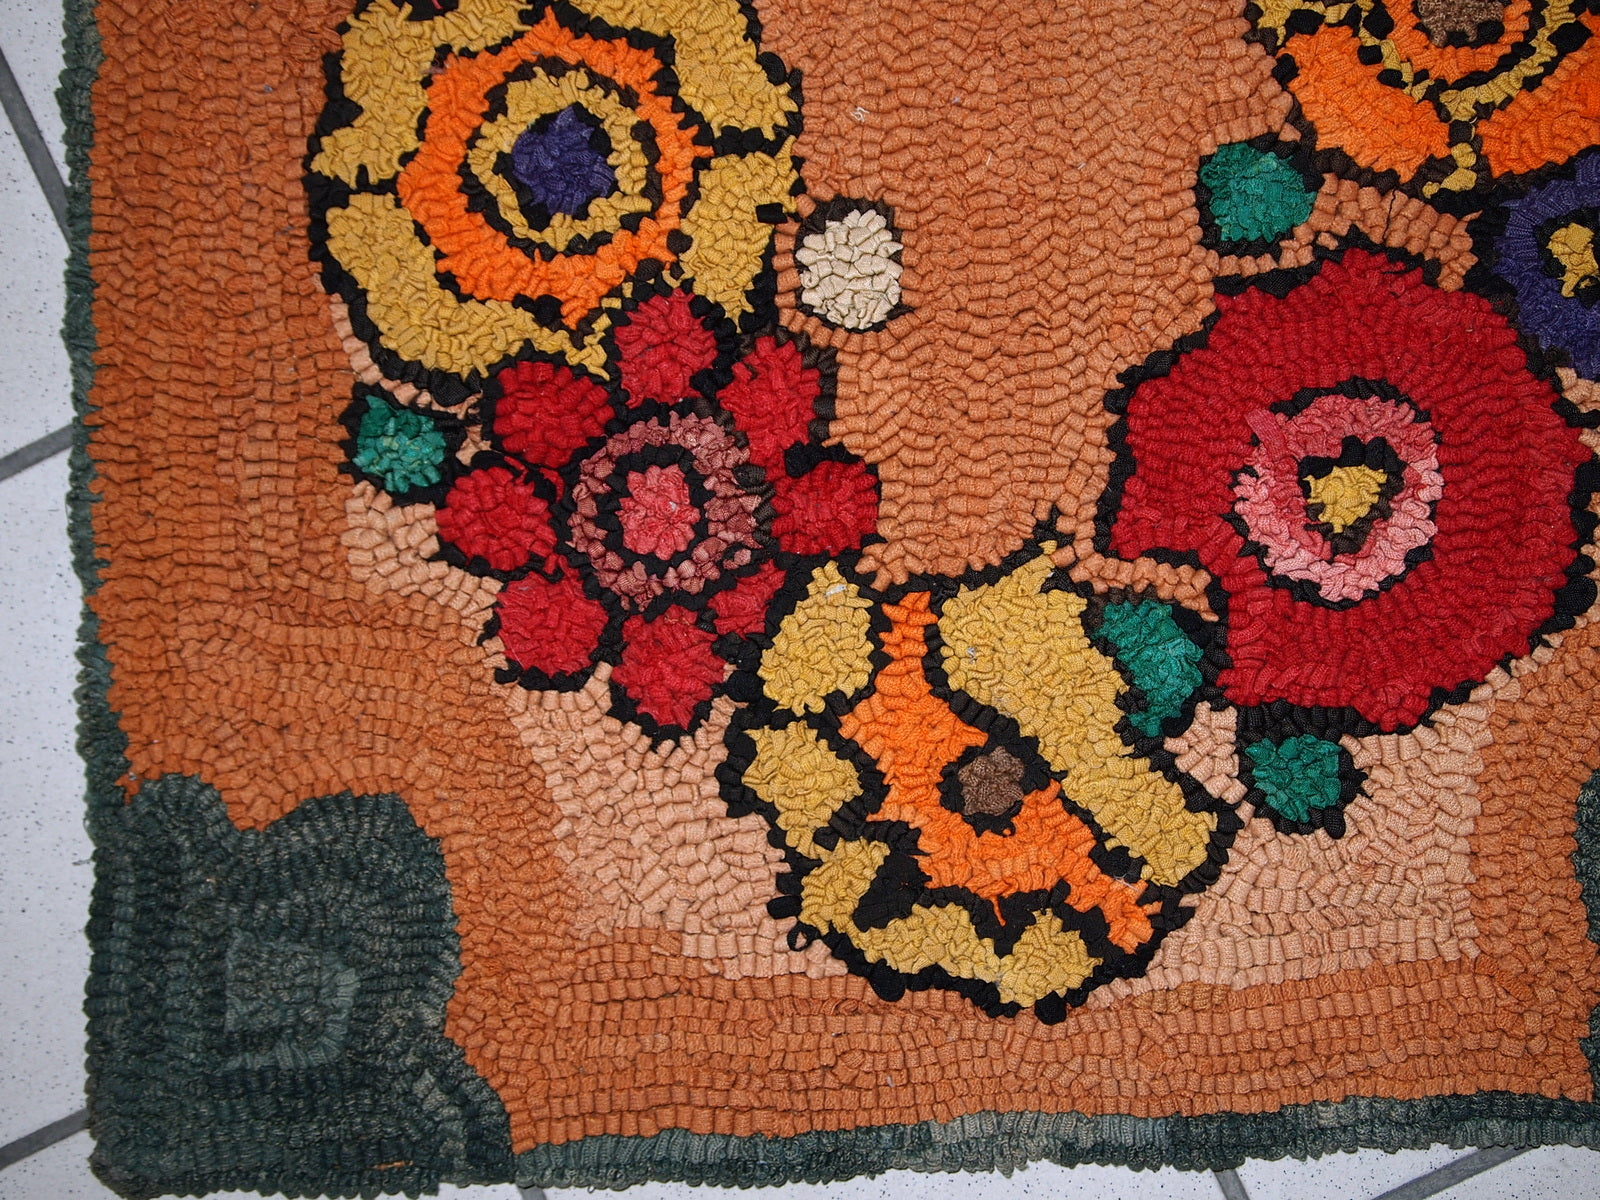 Vintage rug corner detail showcasing green flower design